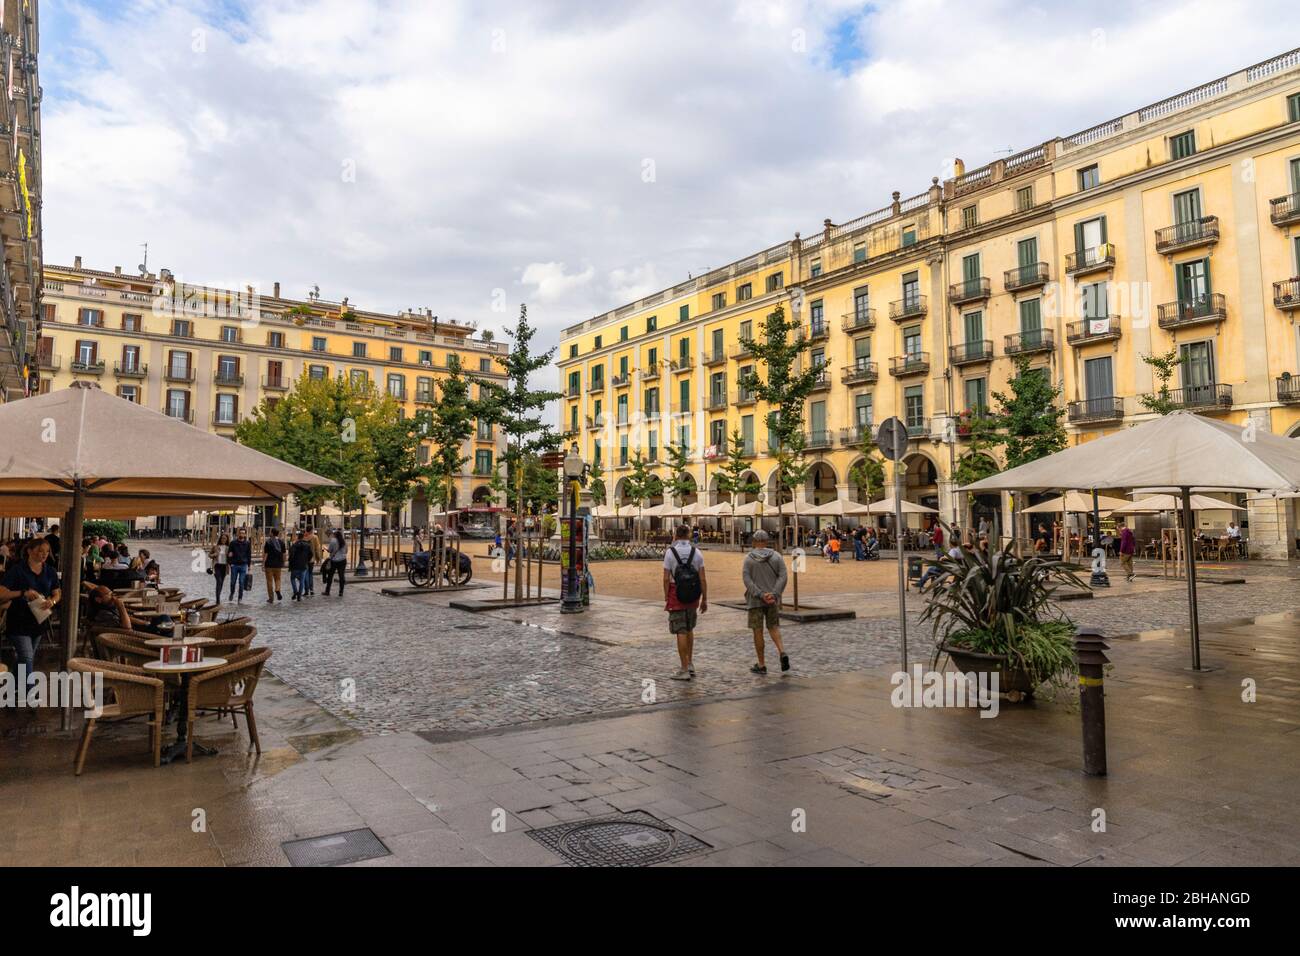 Europe, Spain, Catalonia, Girona, street scene in the Plaza de la Independencia in Girona Stock Photo